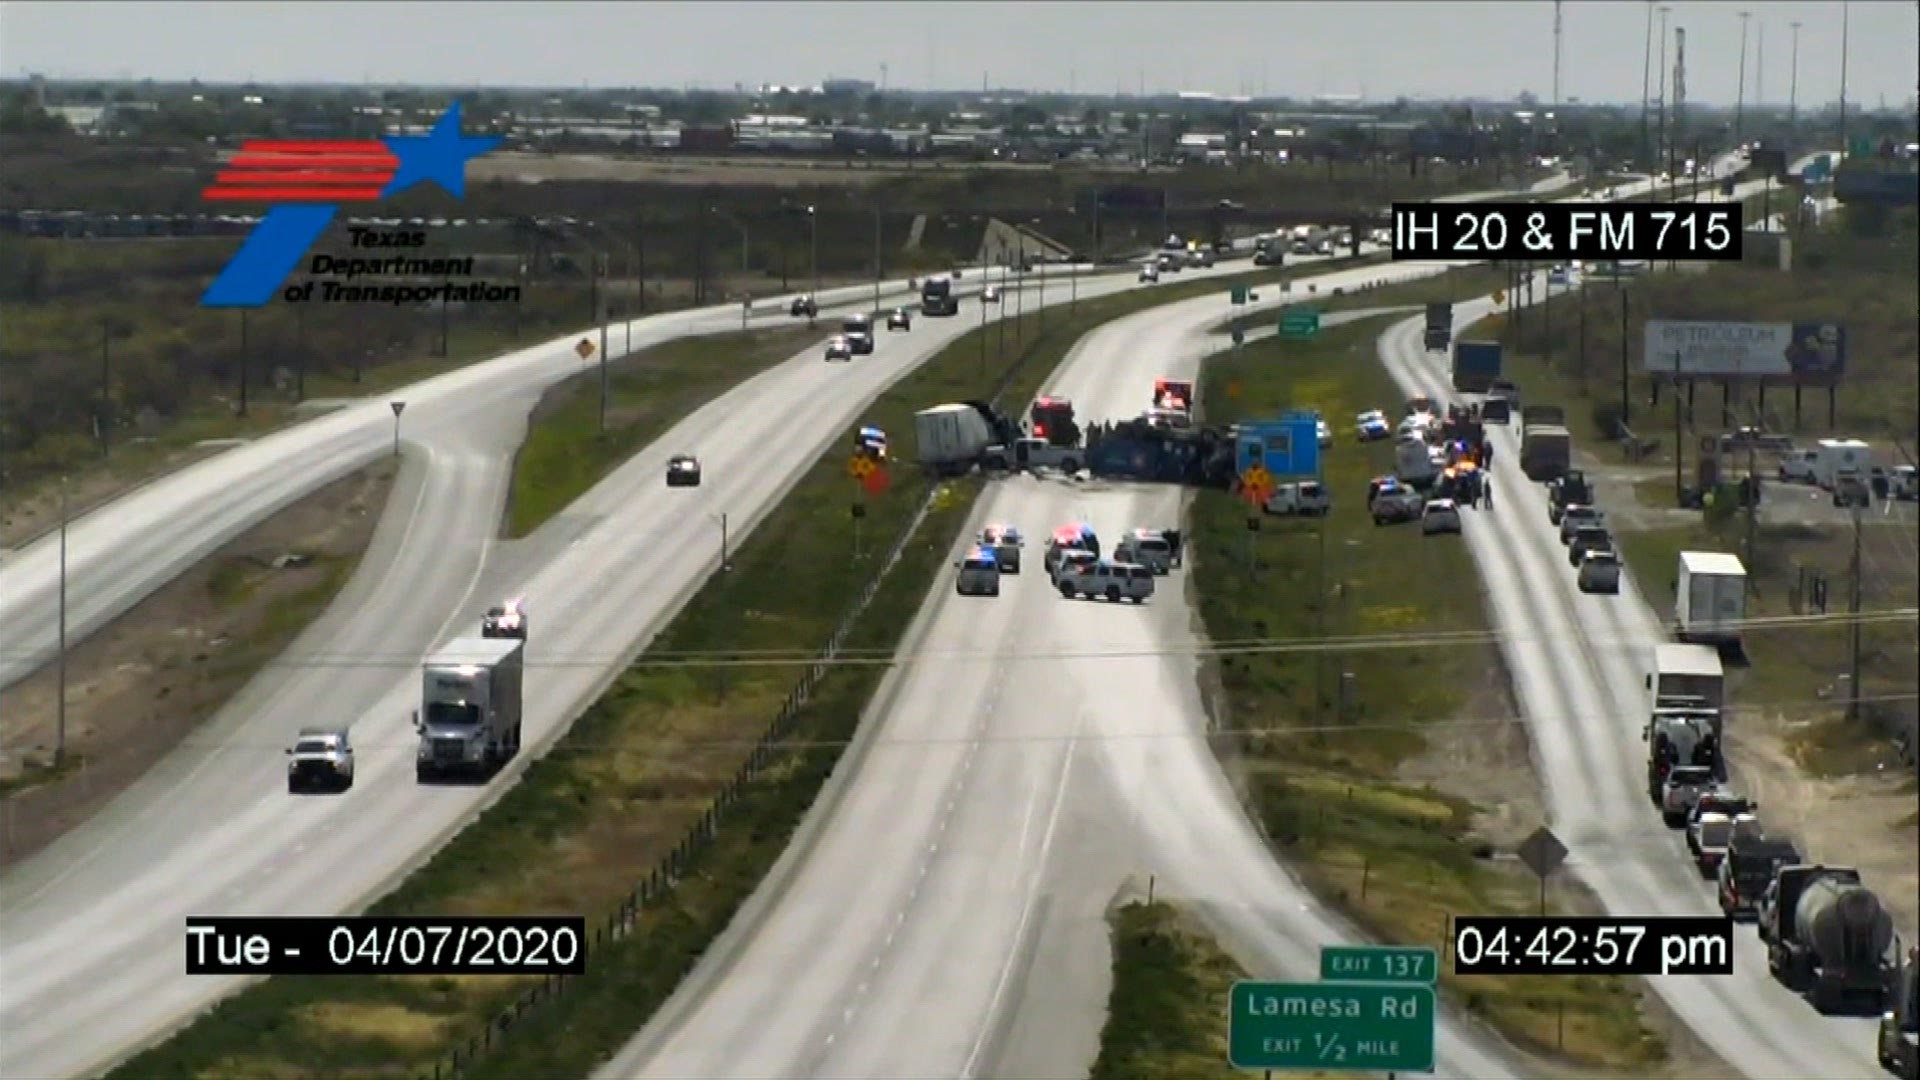 Skycam video of a crash on I-20 in Midland County